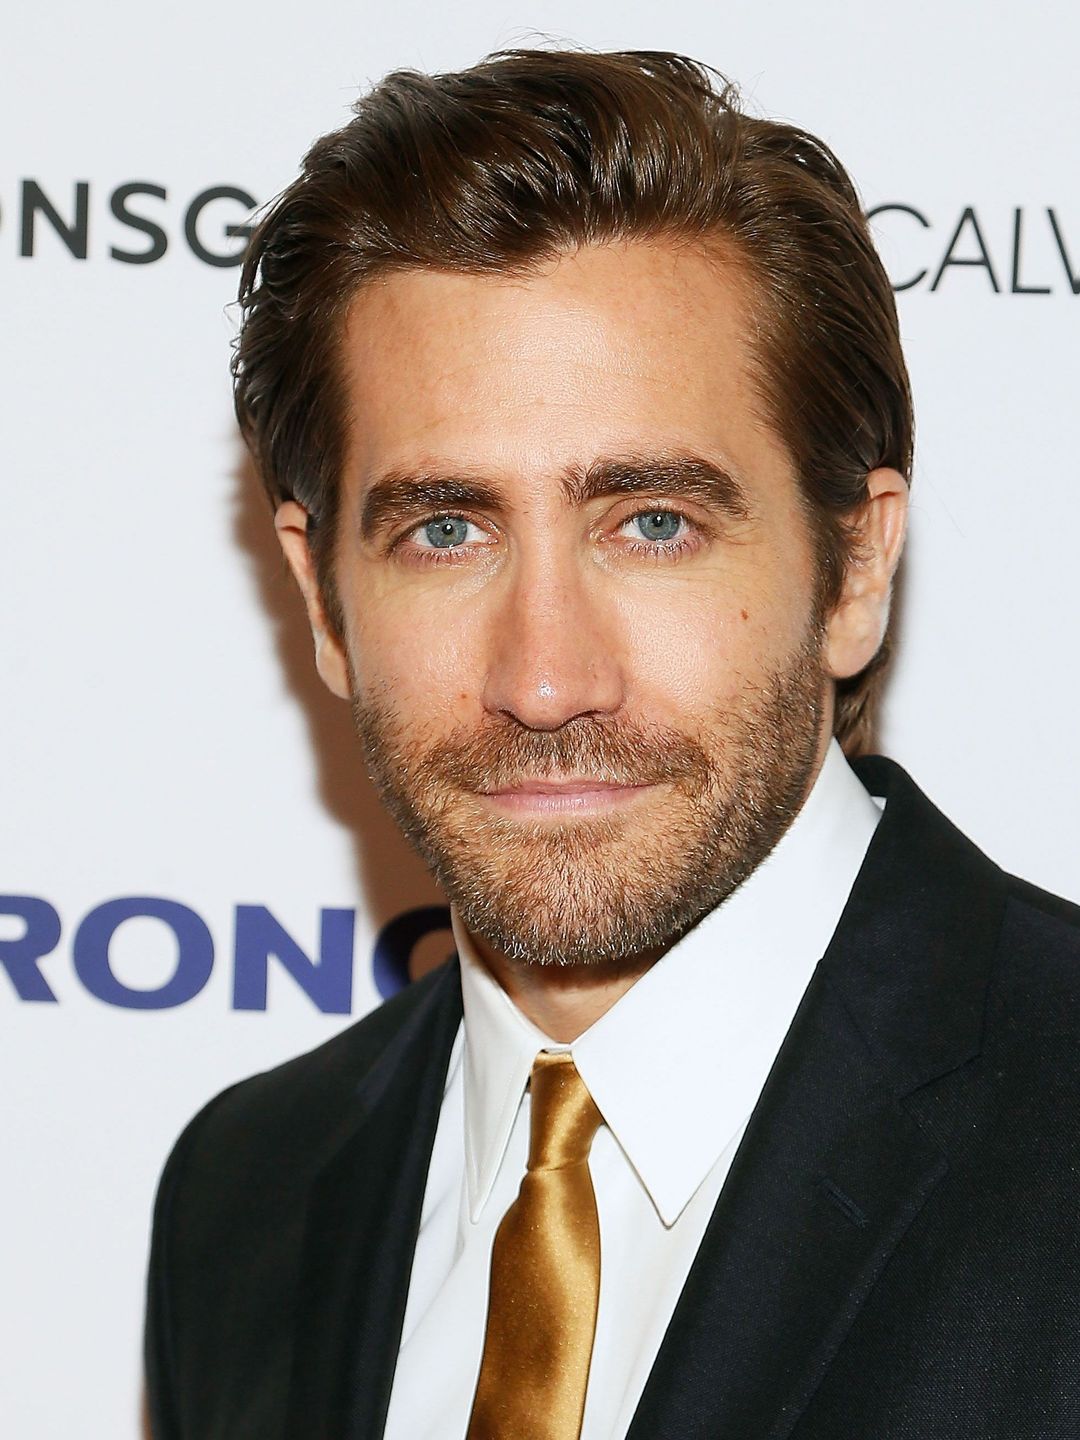 Jake Gyllenhaal does he have kids